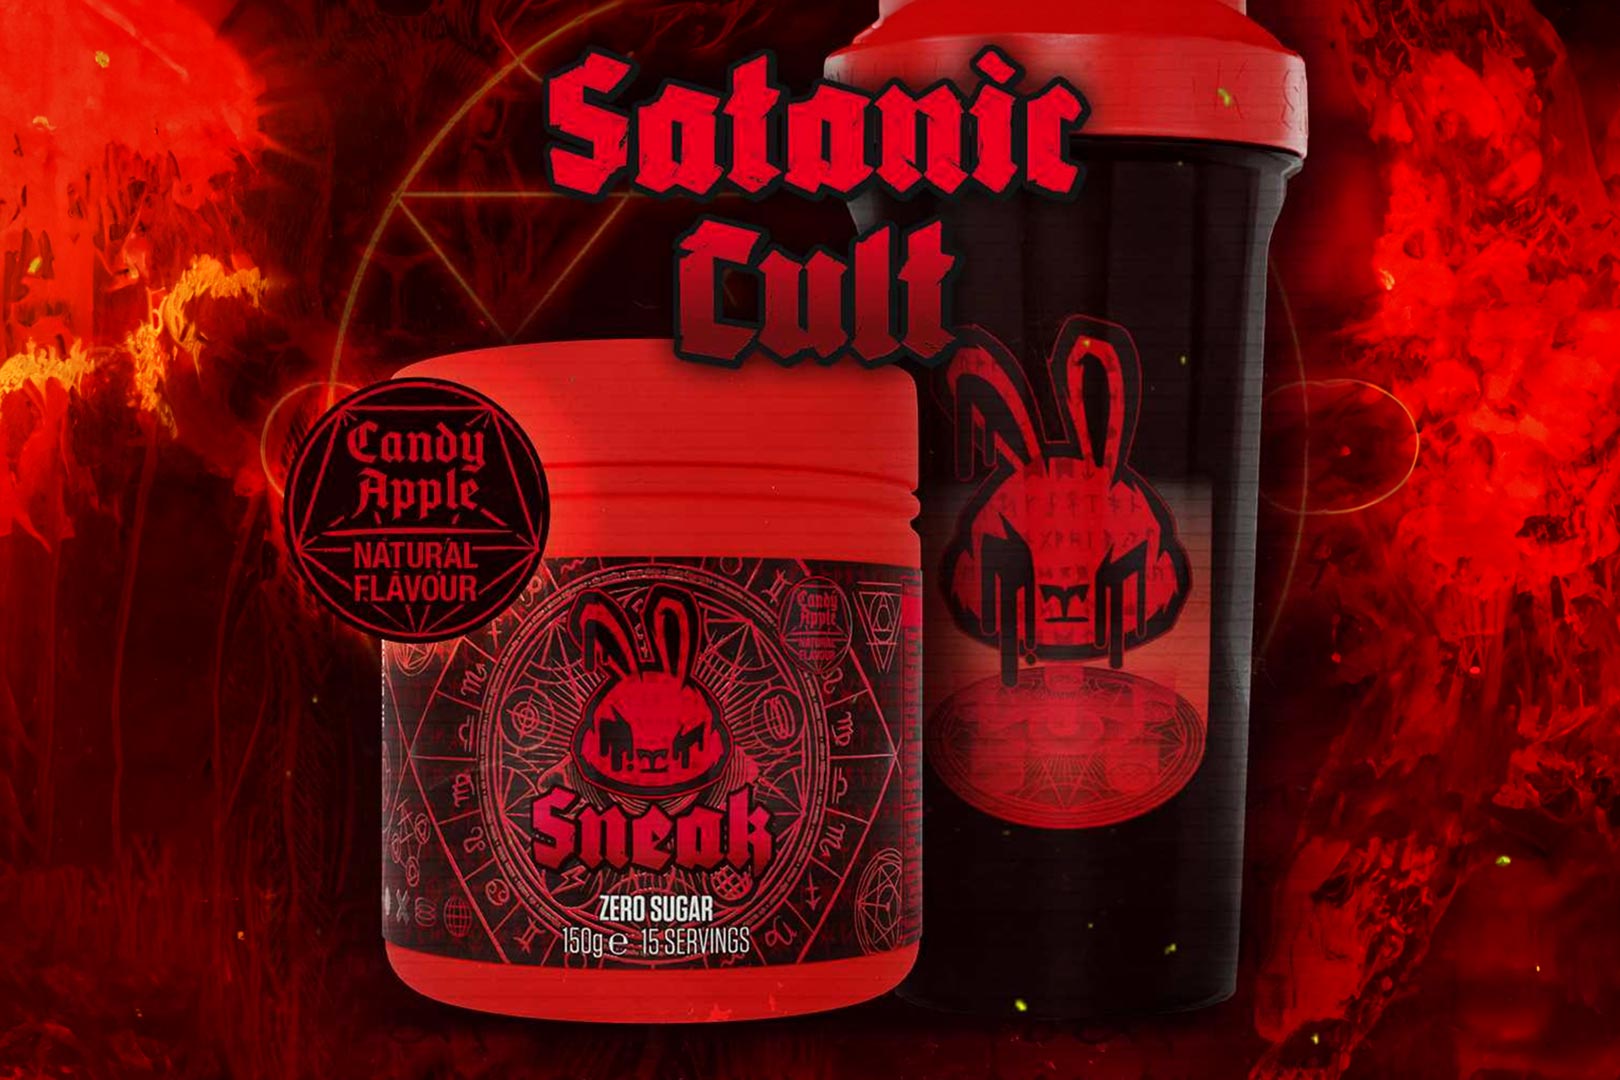 Satanic Cult Sneak Energy